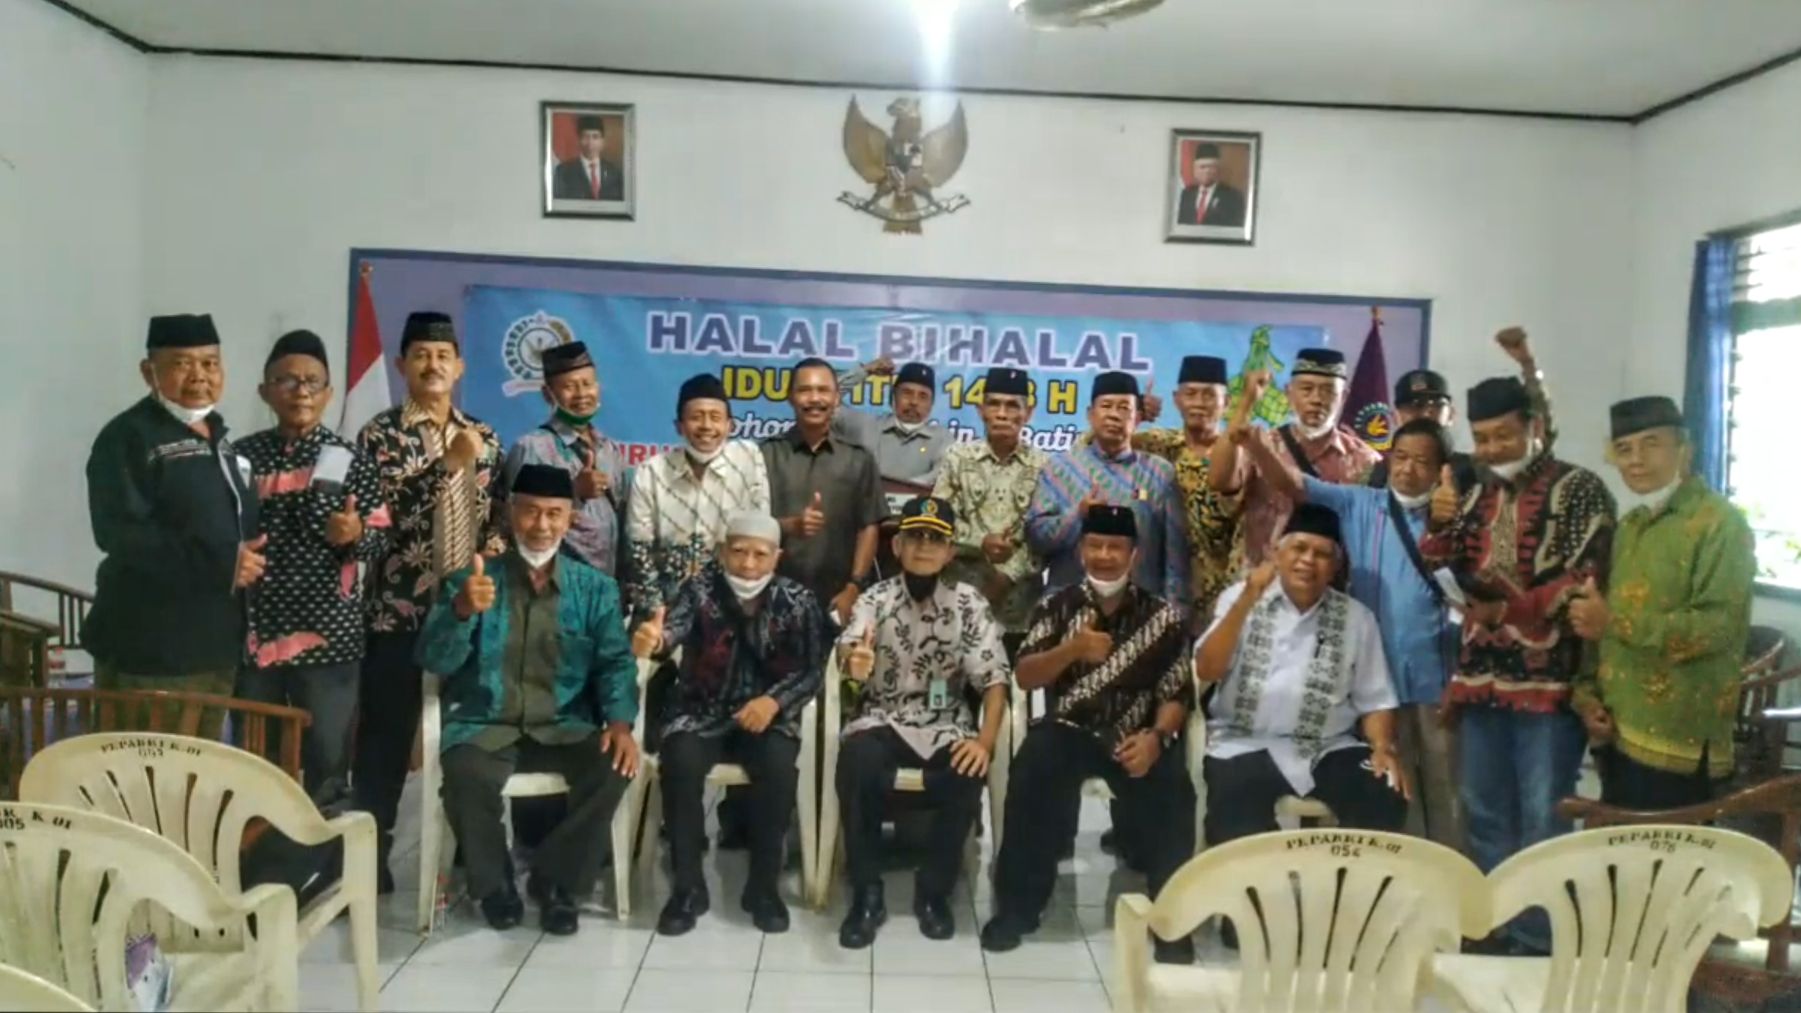 Keindahan Idul Fitri di Indonesia